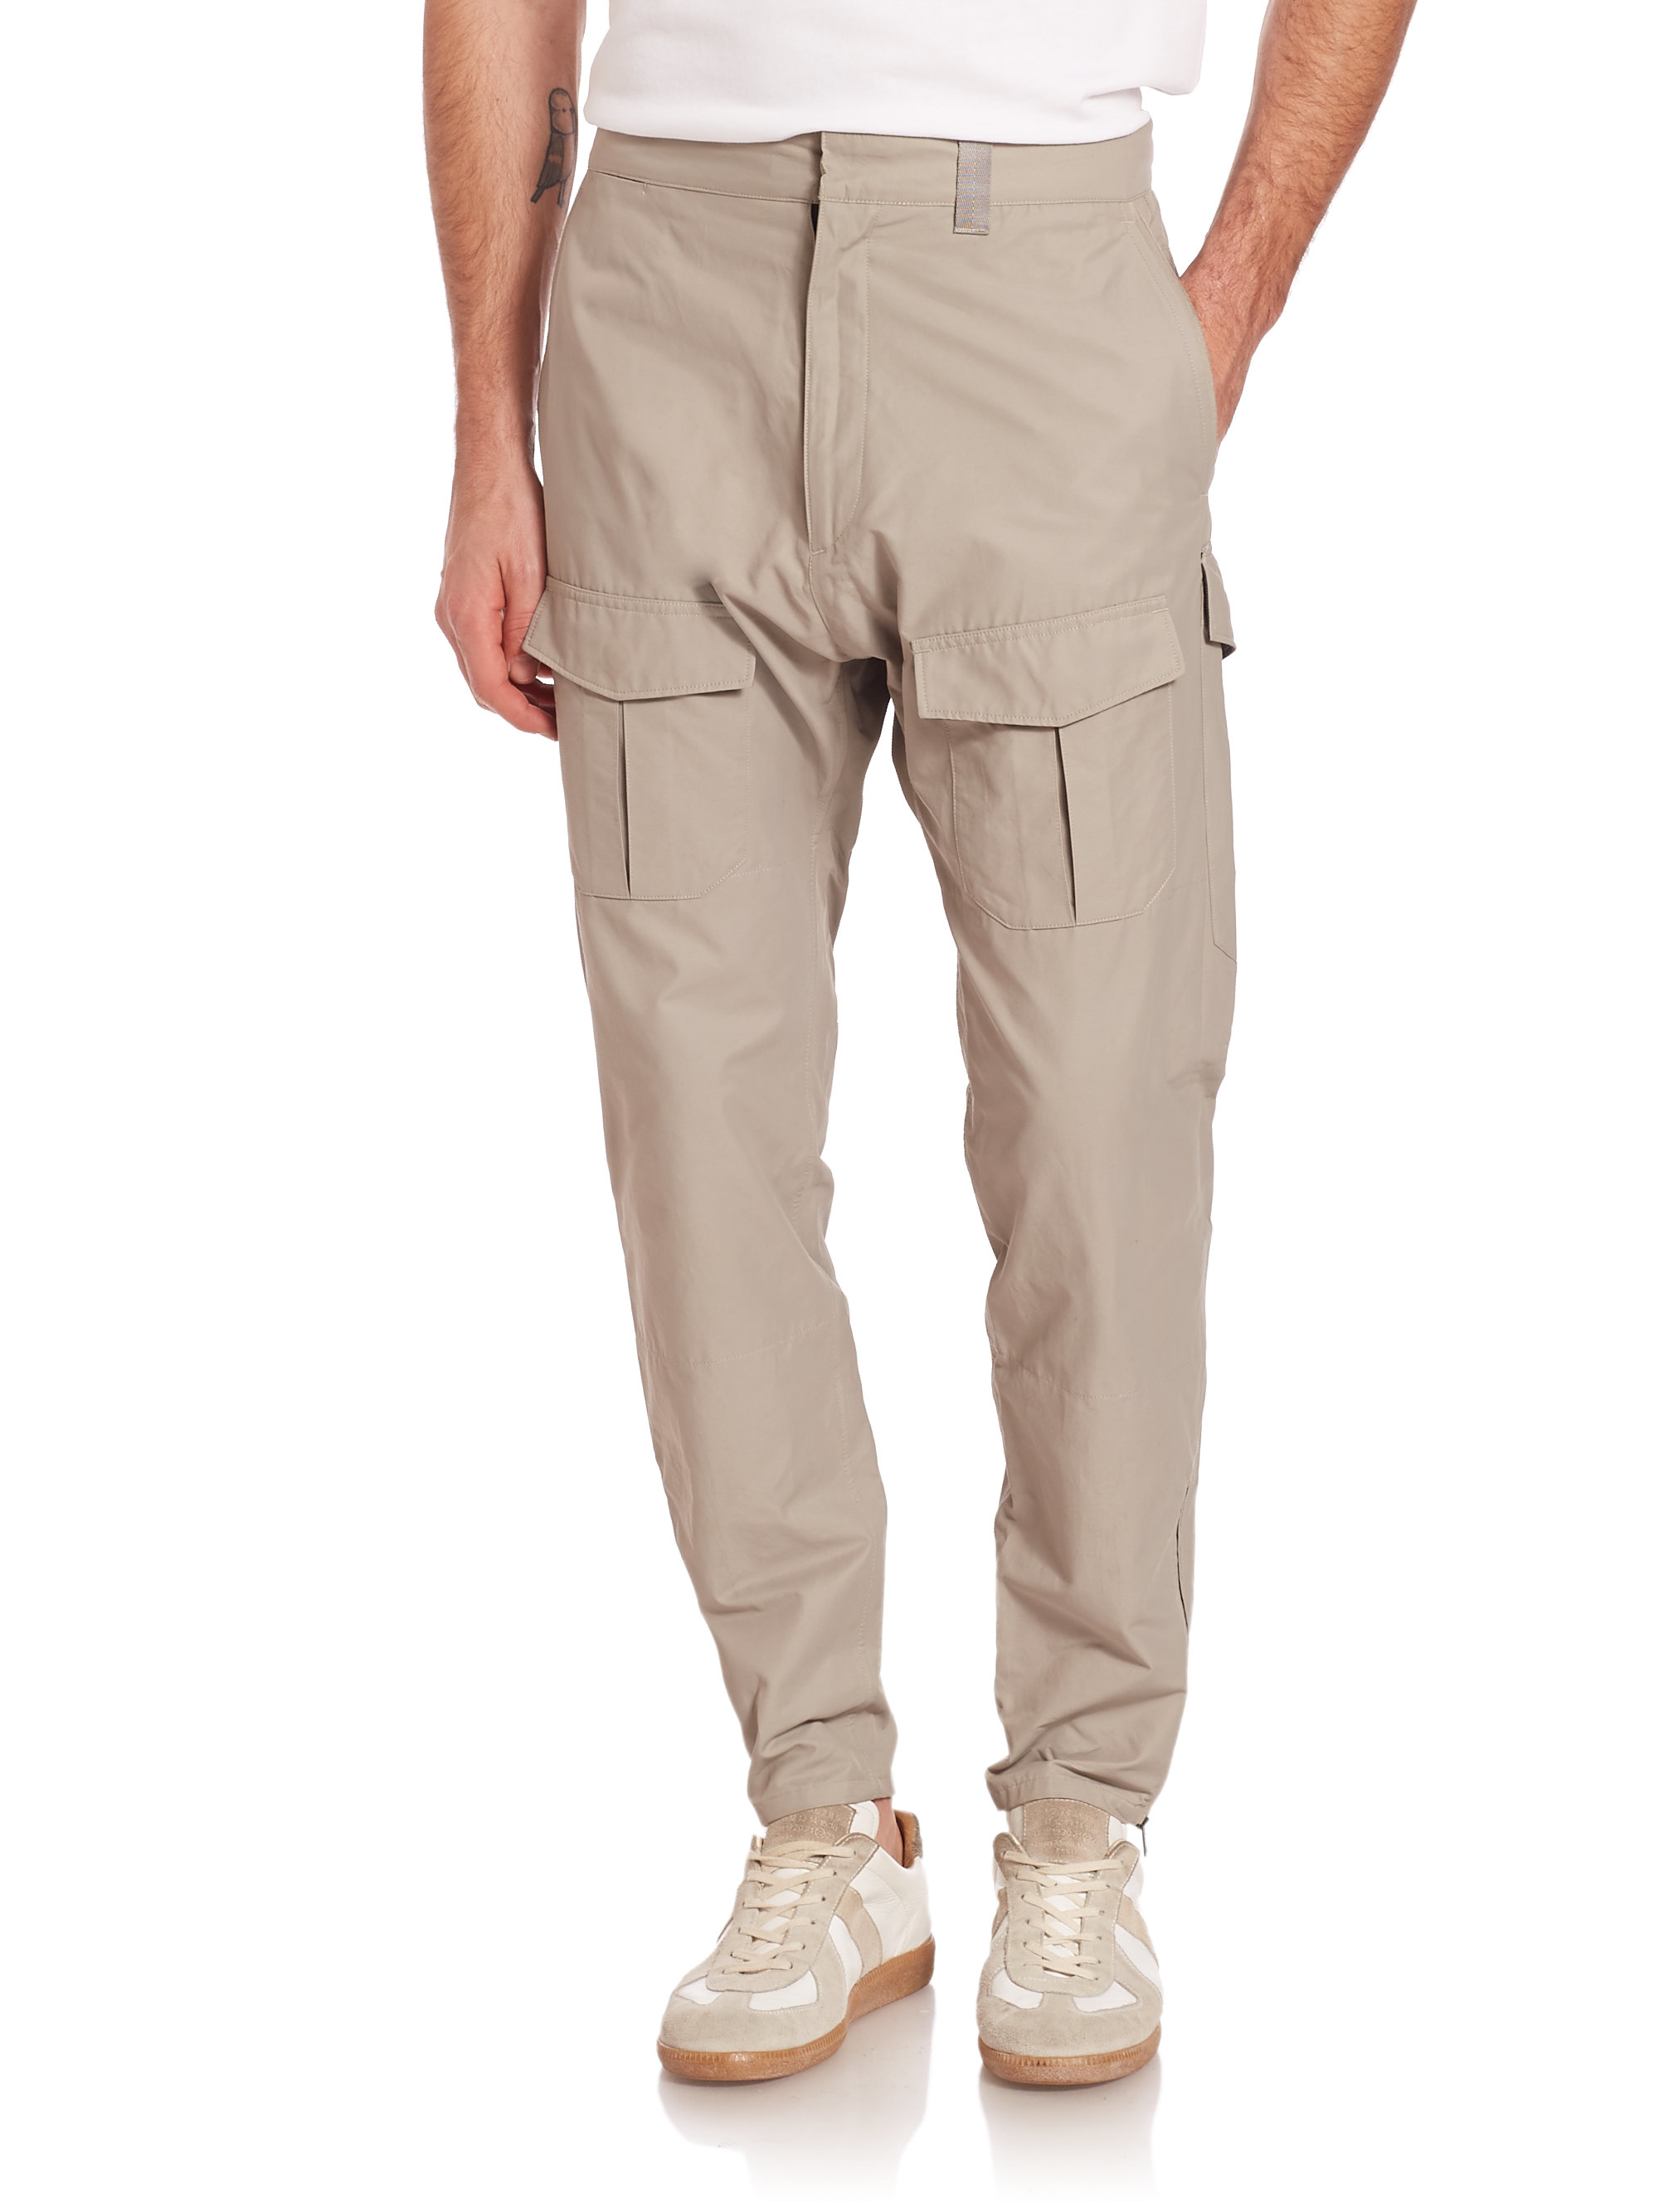 Rag & Bone Cotton Corbin Cargo Pants in Gray for Men - Lyst